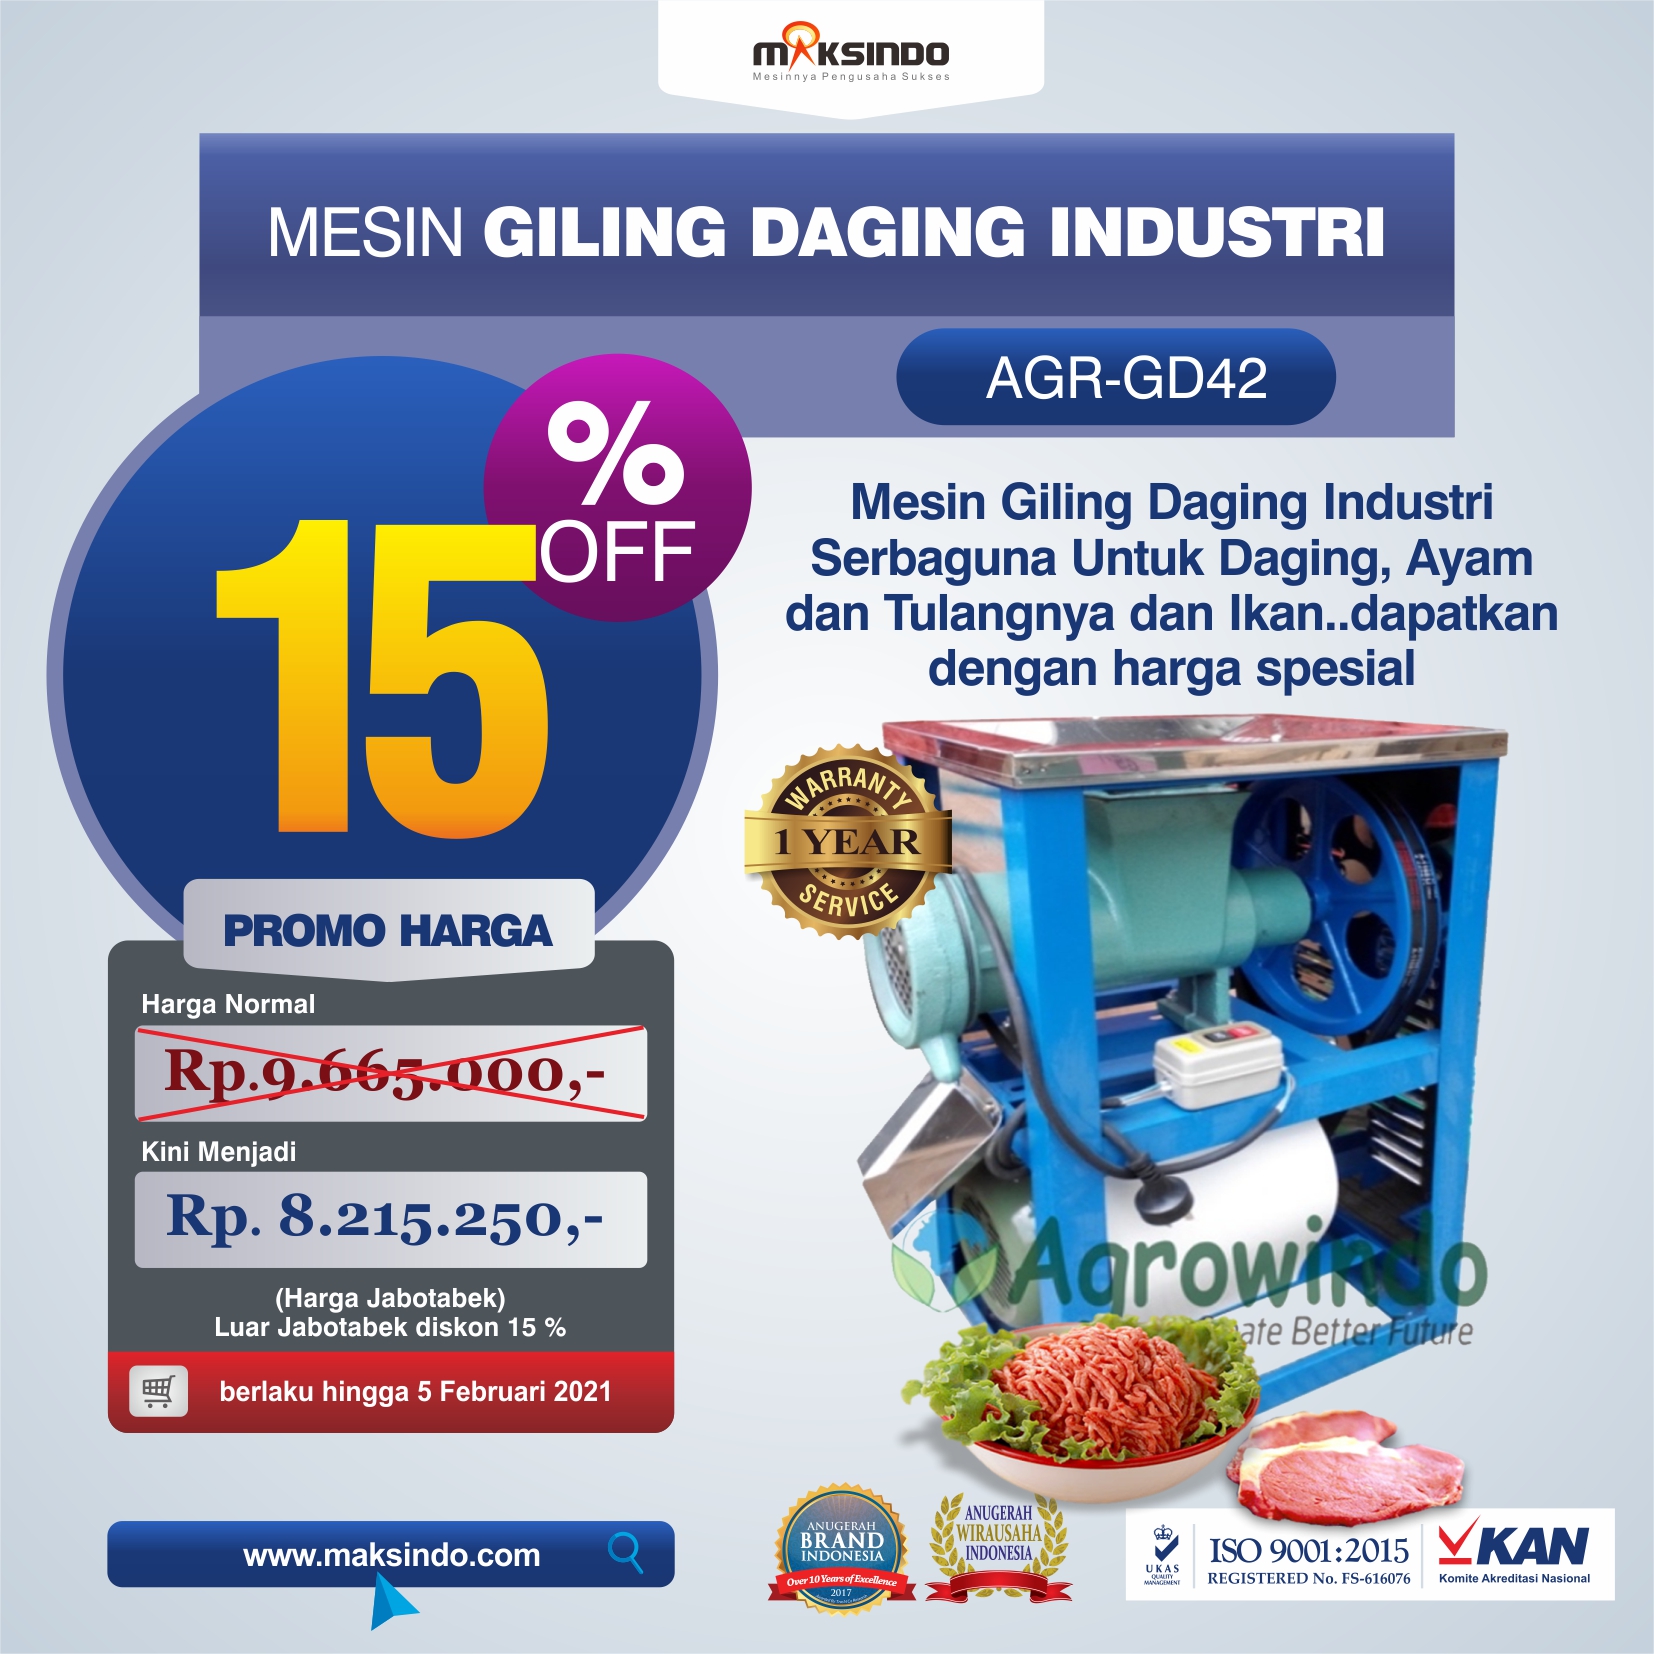 Jual Mesin Giling Daging Industri (AGR-GD42) di Yogyakarta